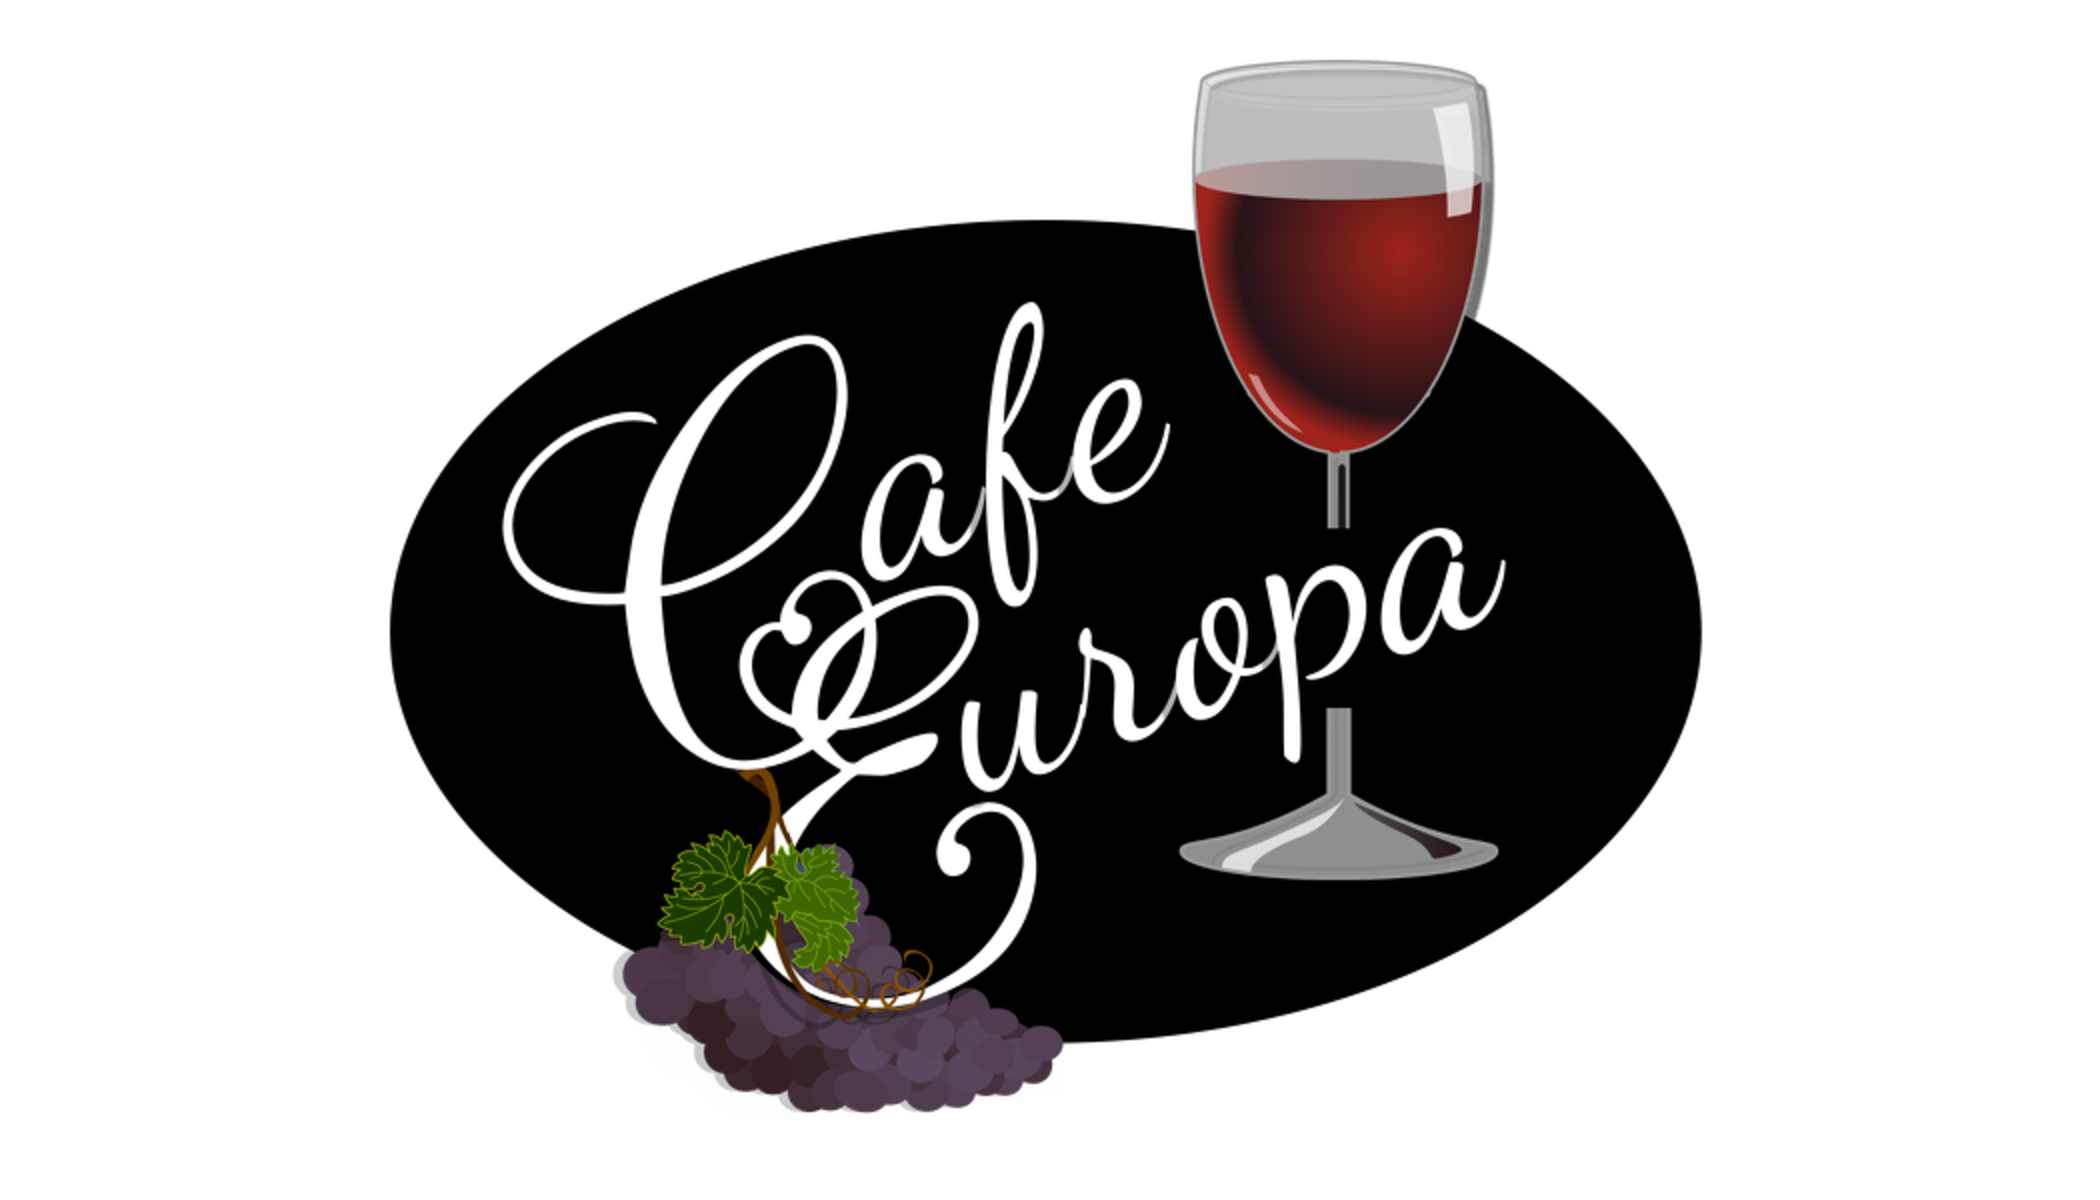 Cafe Europa Logo and Website